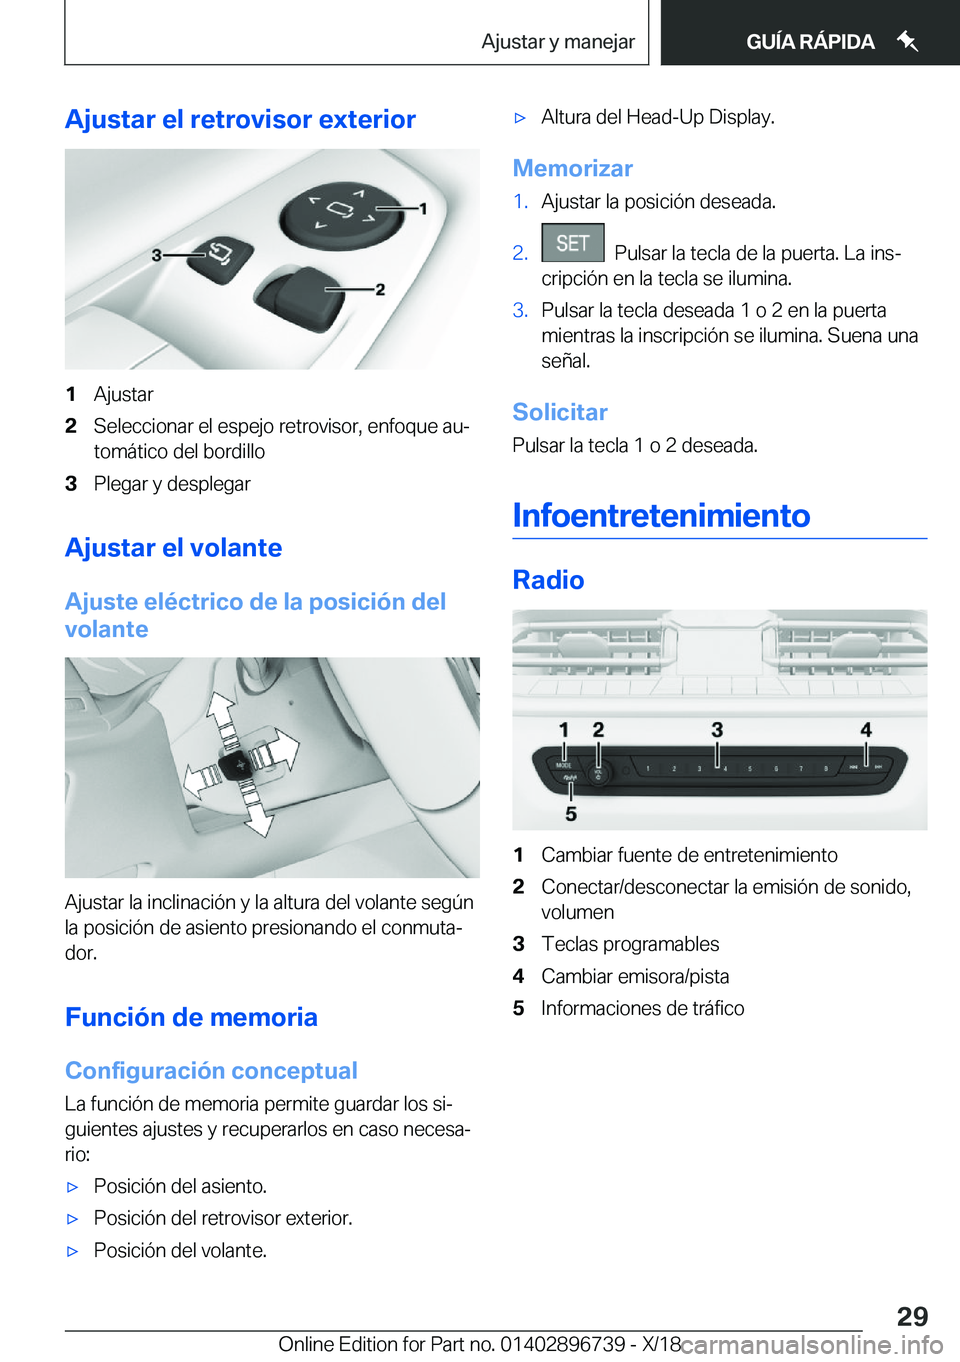 BMW X5 2019  Manuales de Empleo (in Spanish) �A�j�u�s�t�a�r��e�l��r�e�t�r�o�v�i�s�o�r��e�x�t�e�r�i�o�r�1�A�j�u�s�t�a�r�2�S�e�l�e�c�c�i�o�n�a�r��e�l��e�s�p�e�j�o��r�e�t�r�o�v�i�s�o�r�,��e�n�f�o�q�u�e��a�uª
�t�o�m�